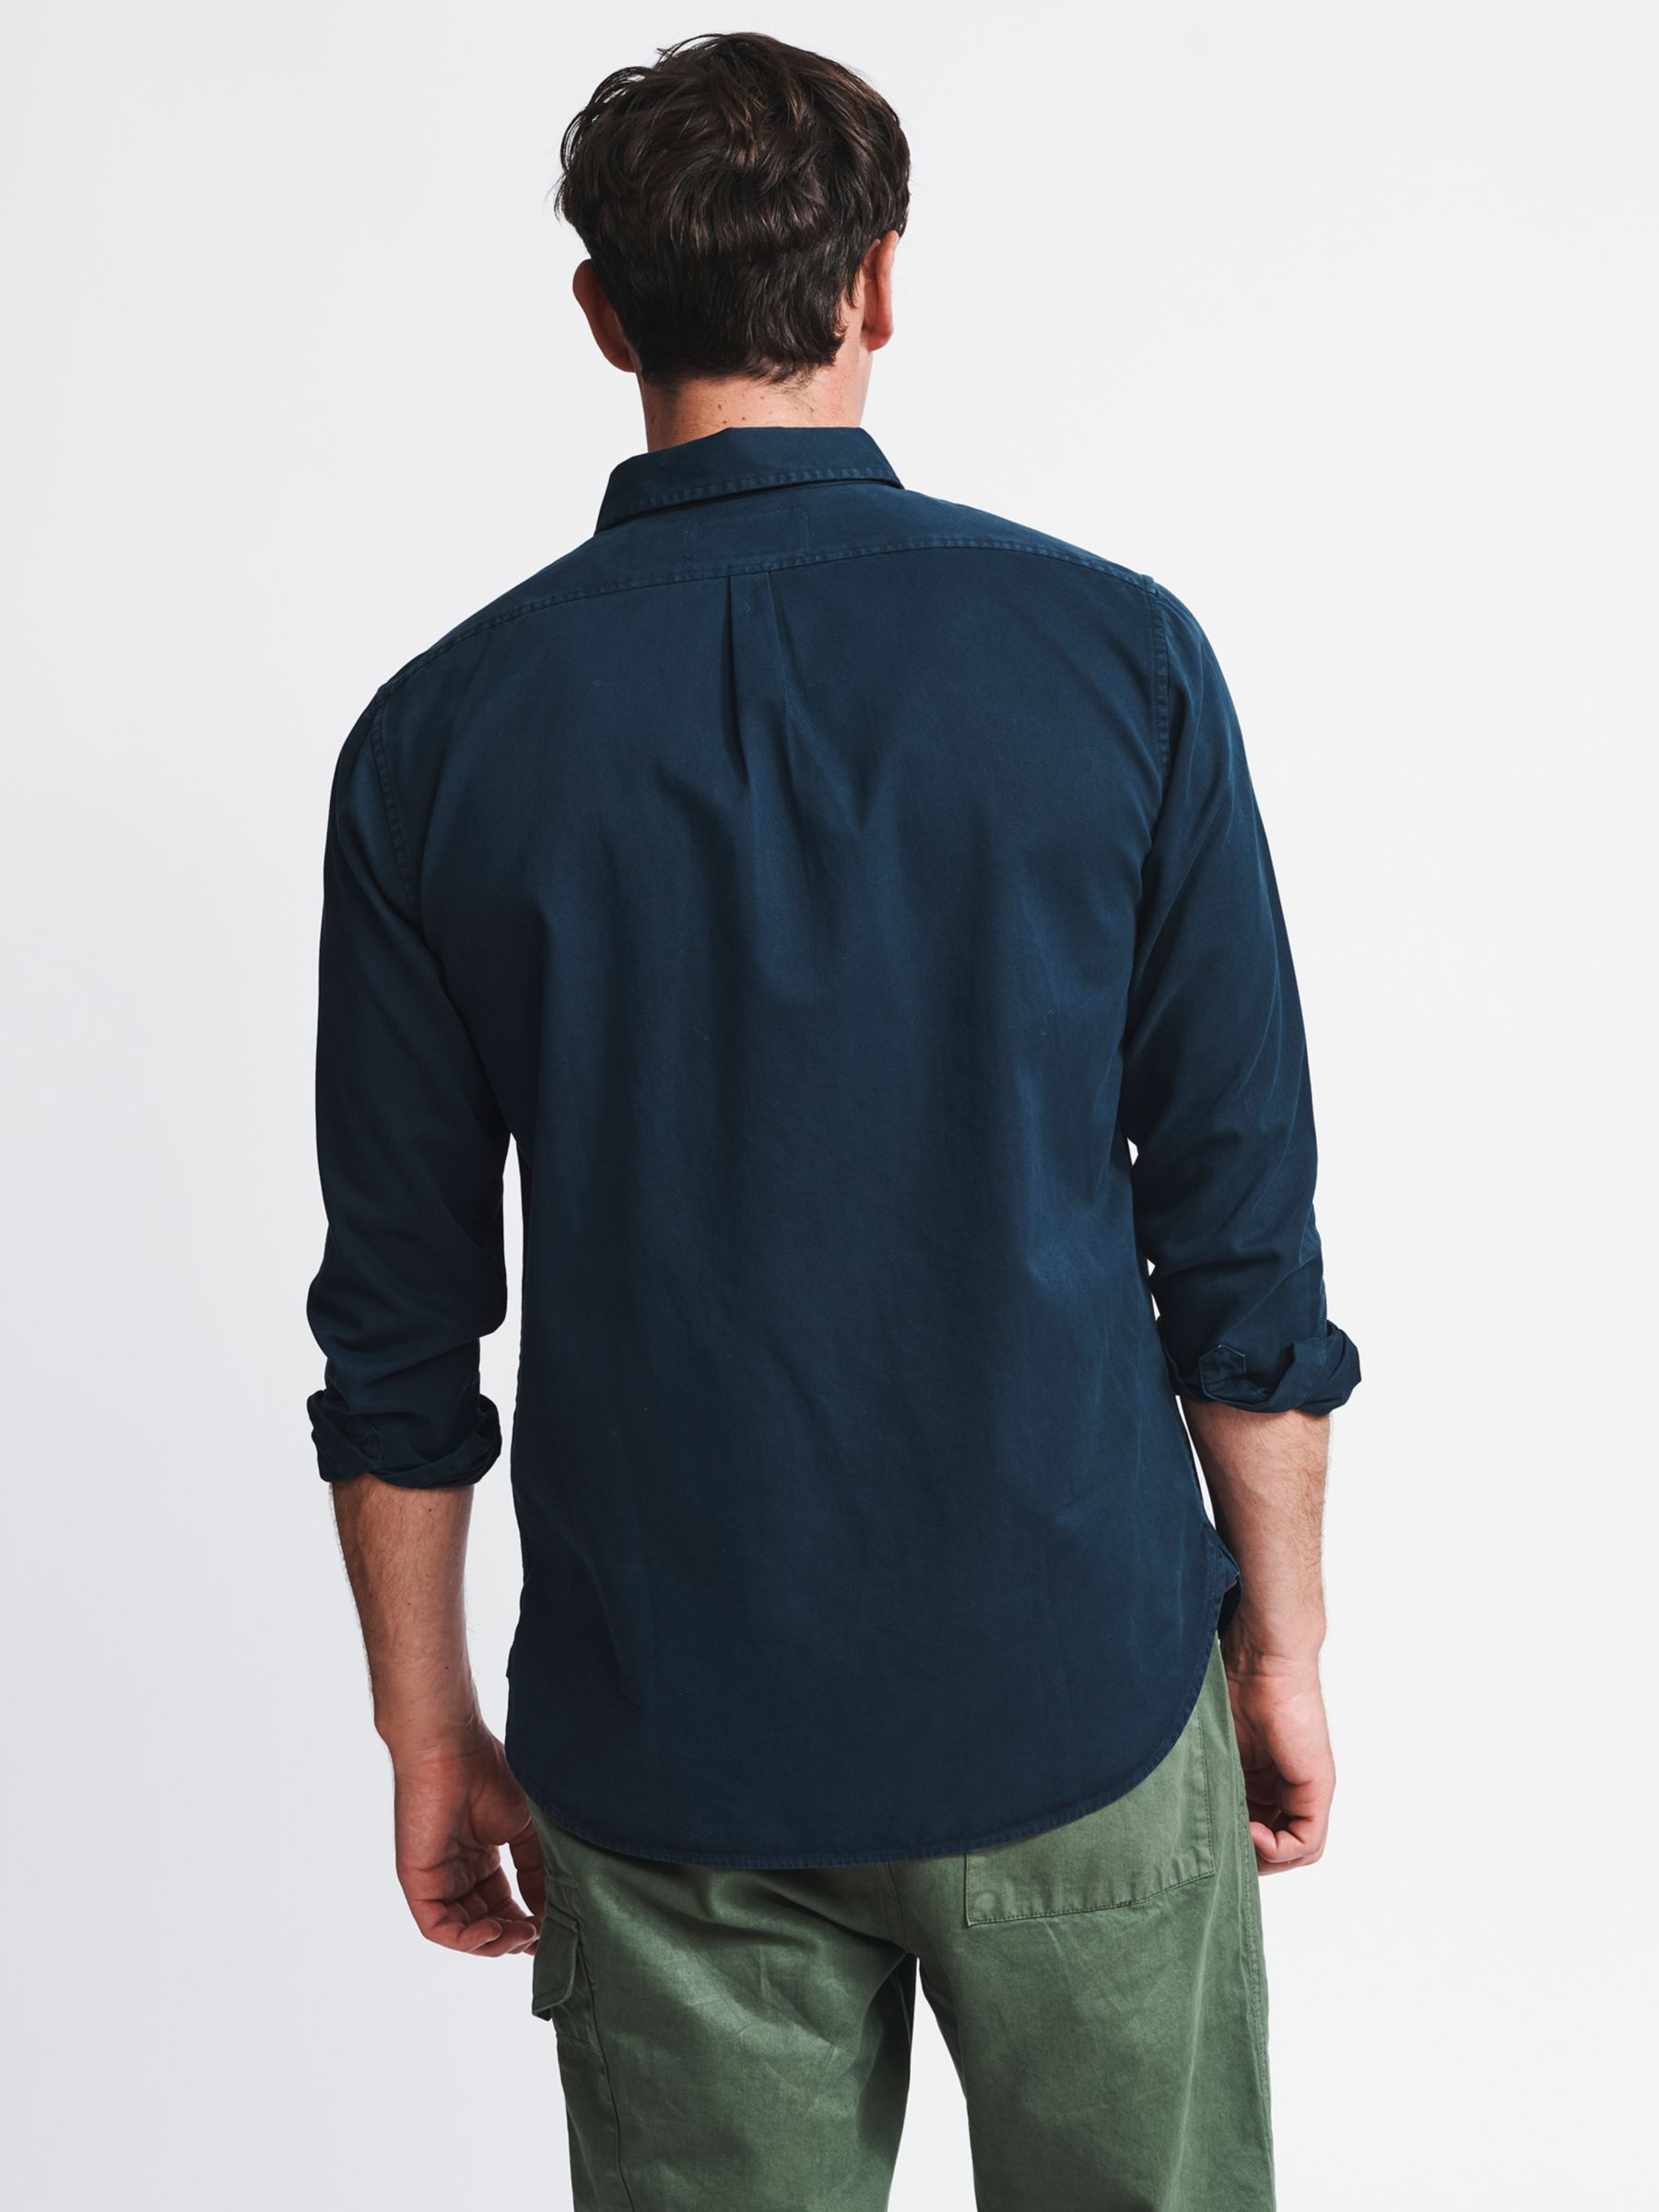 Aubin Hessle Garment Dyed Cotton Shirt, Navy, S